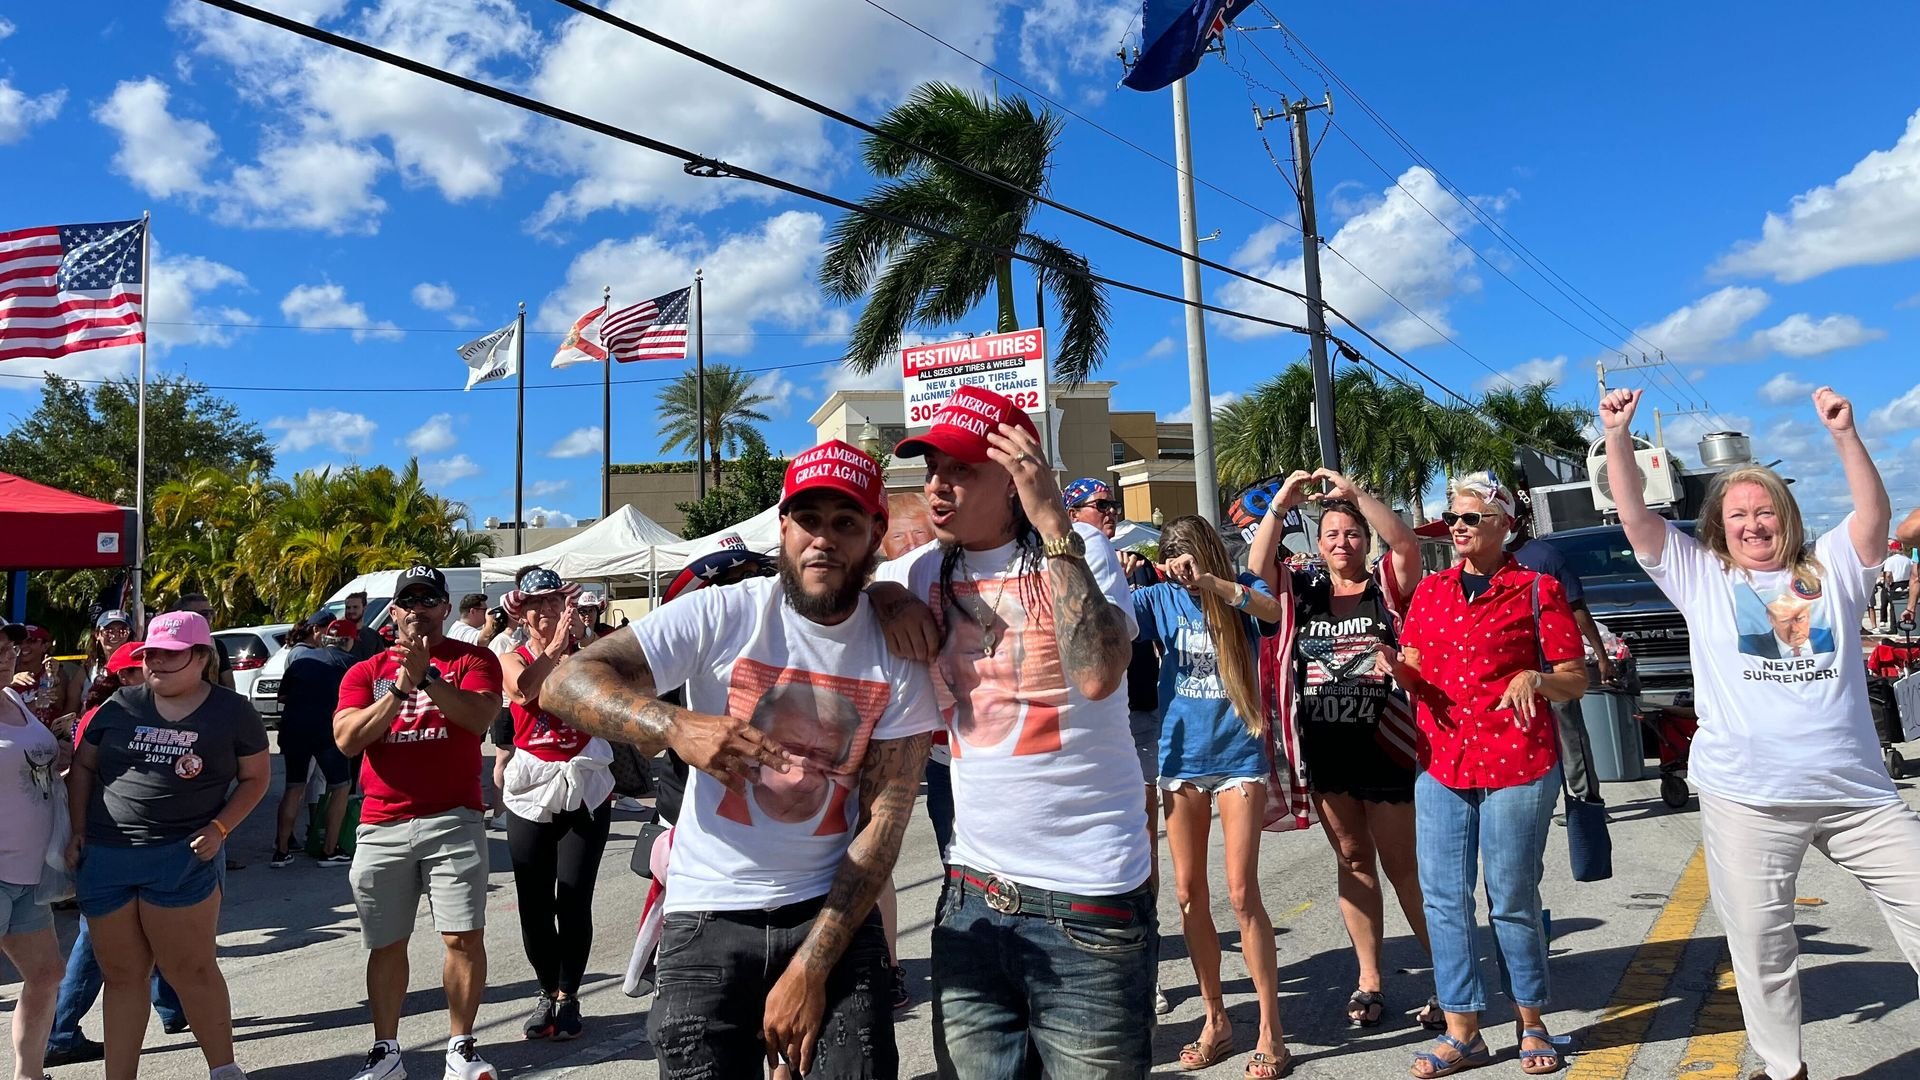 Trump's Hialeah rally was a hot ticket on Miami GOP debate day